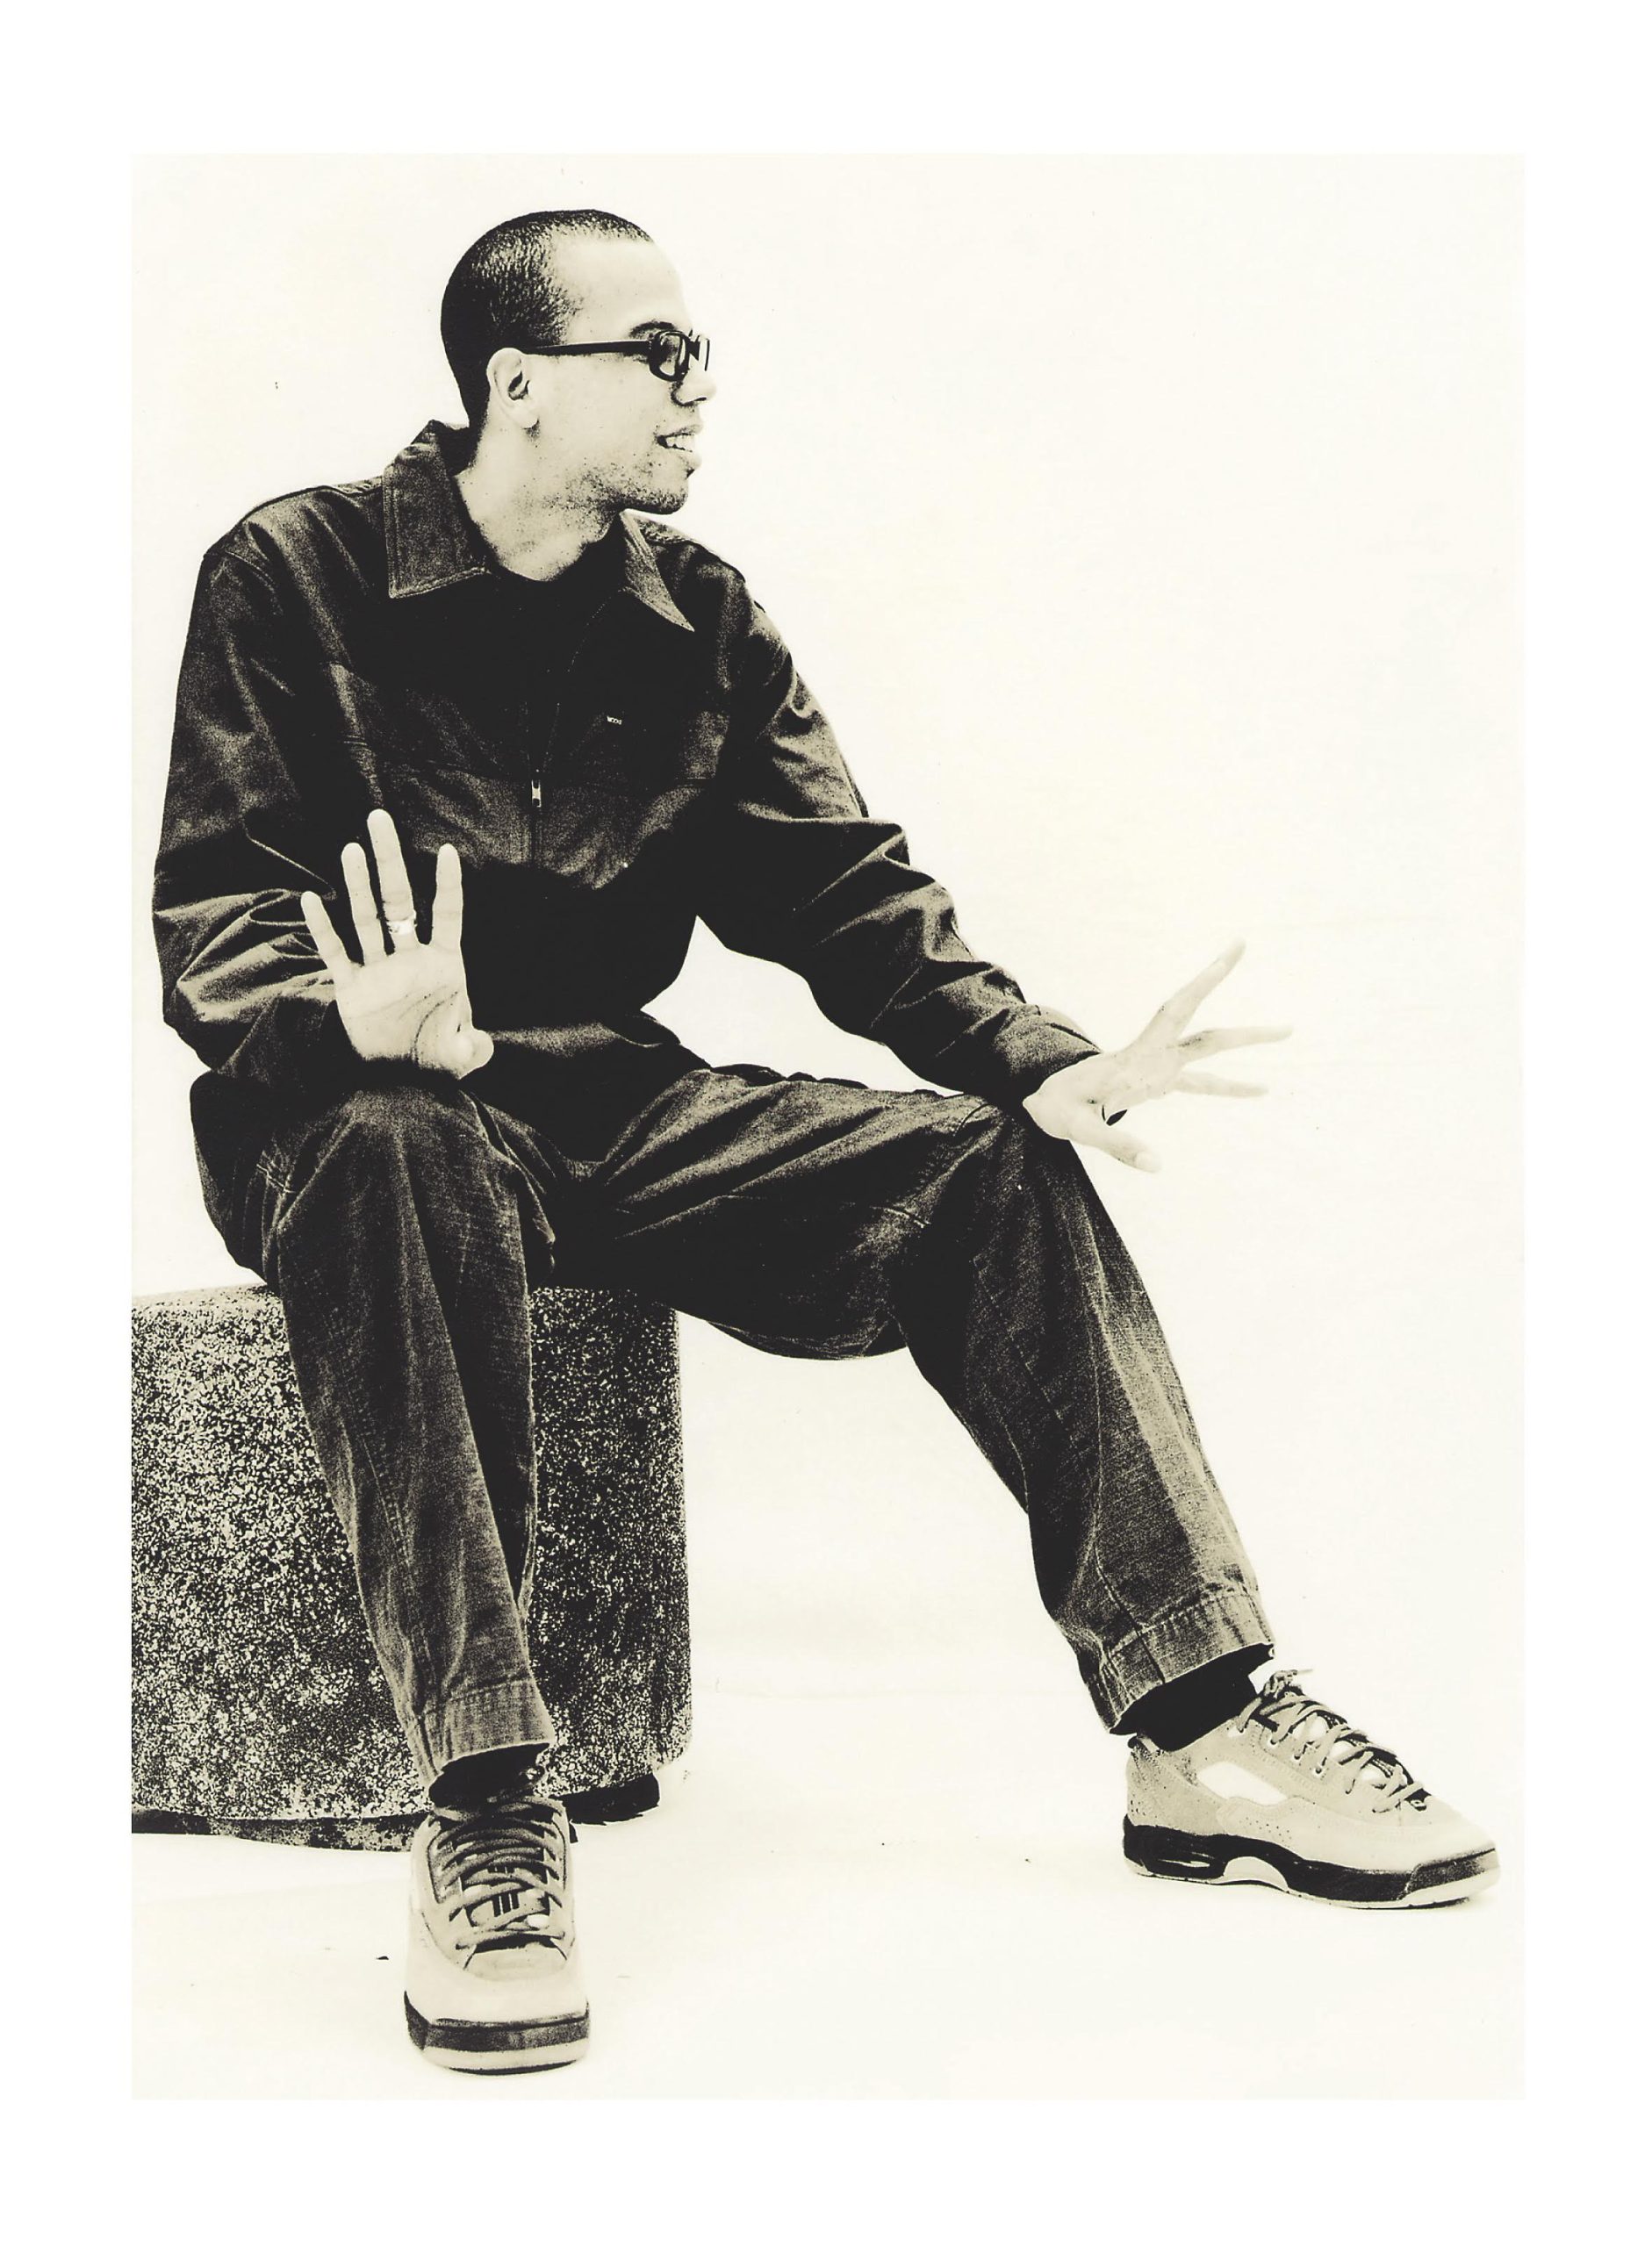 Analog lith print portrait of sitting man wearing glasses. Vertical studio shot.